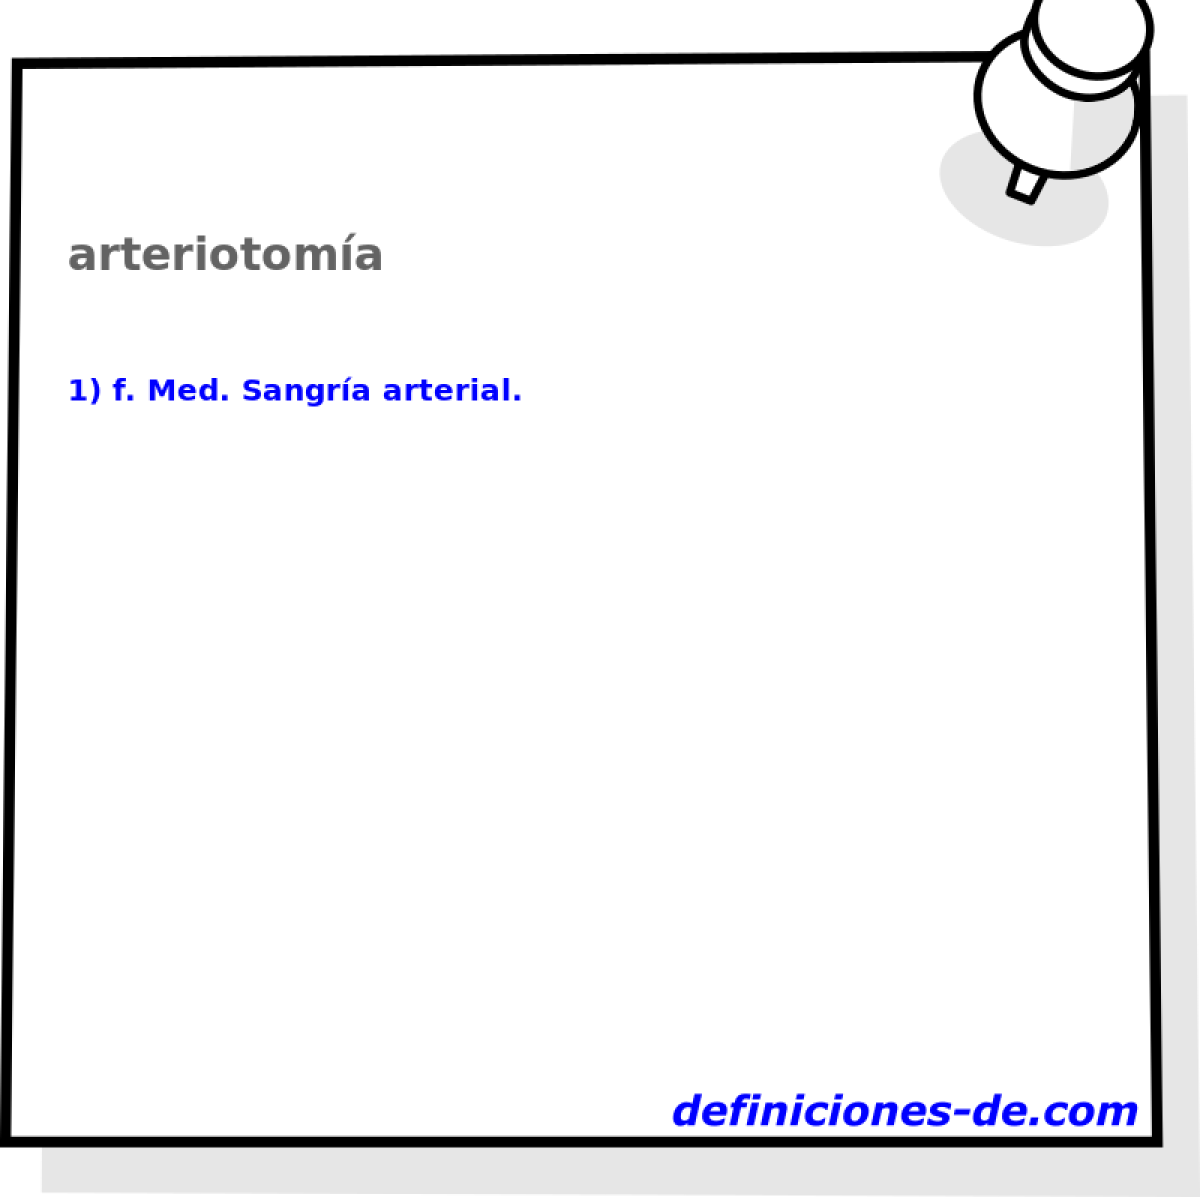 arteriotoma 